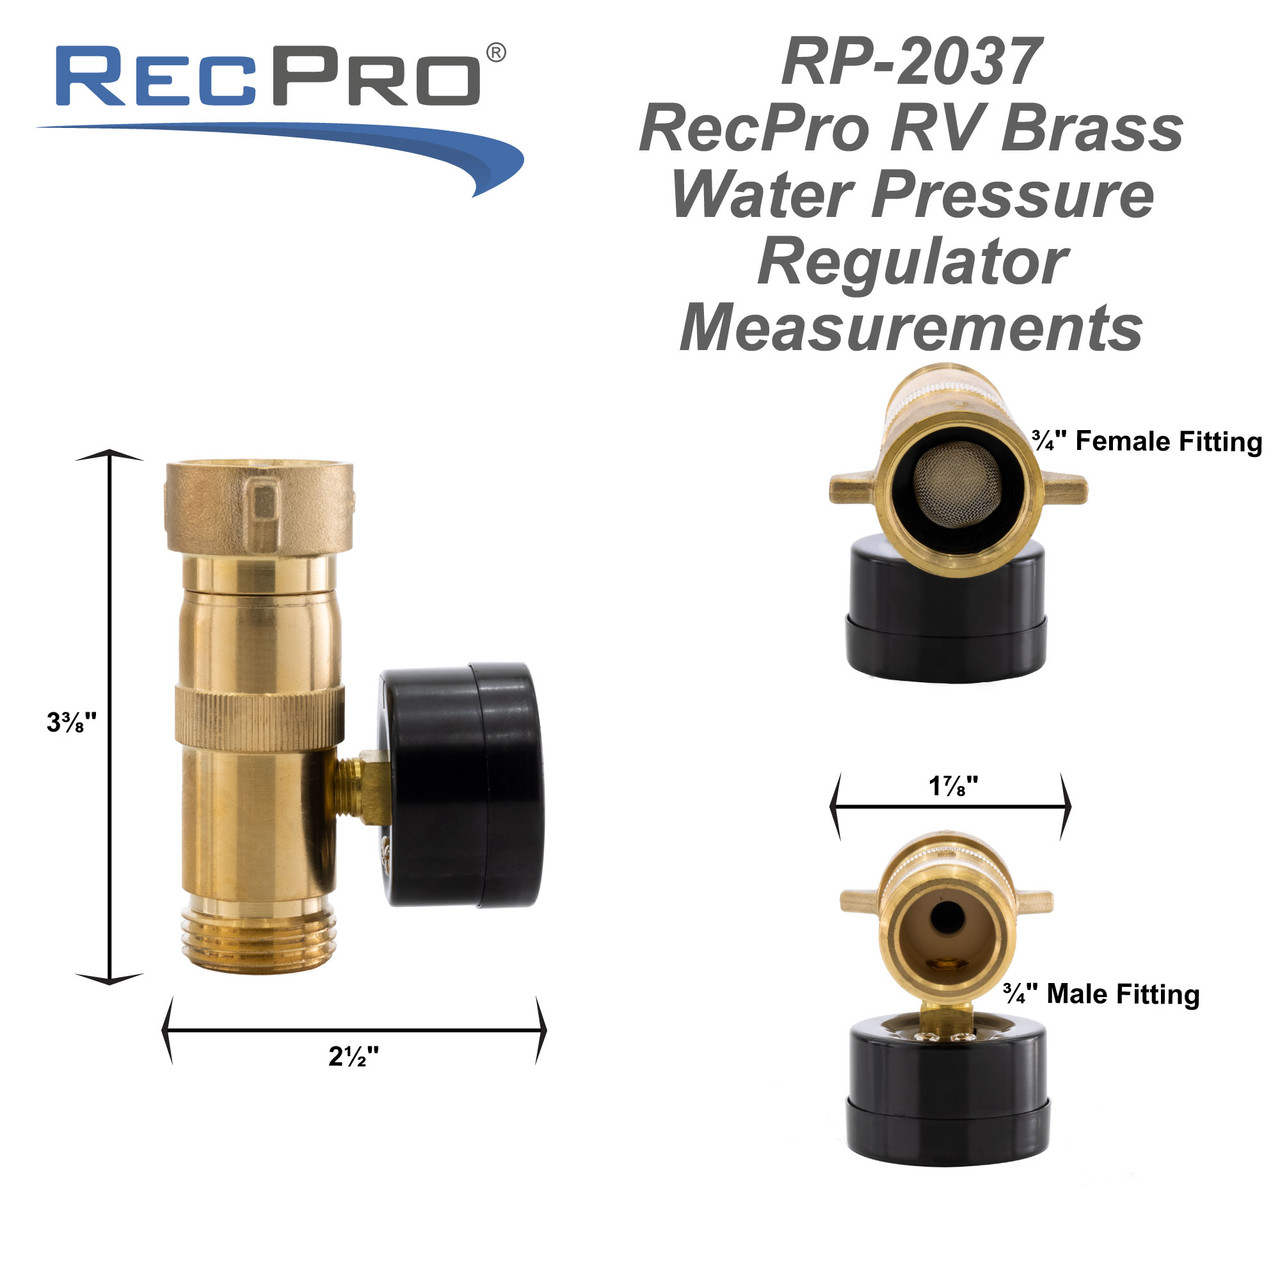 RV Water Pressure Regulator - RecPro